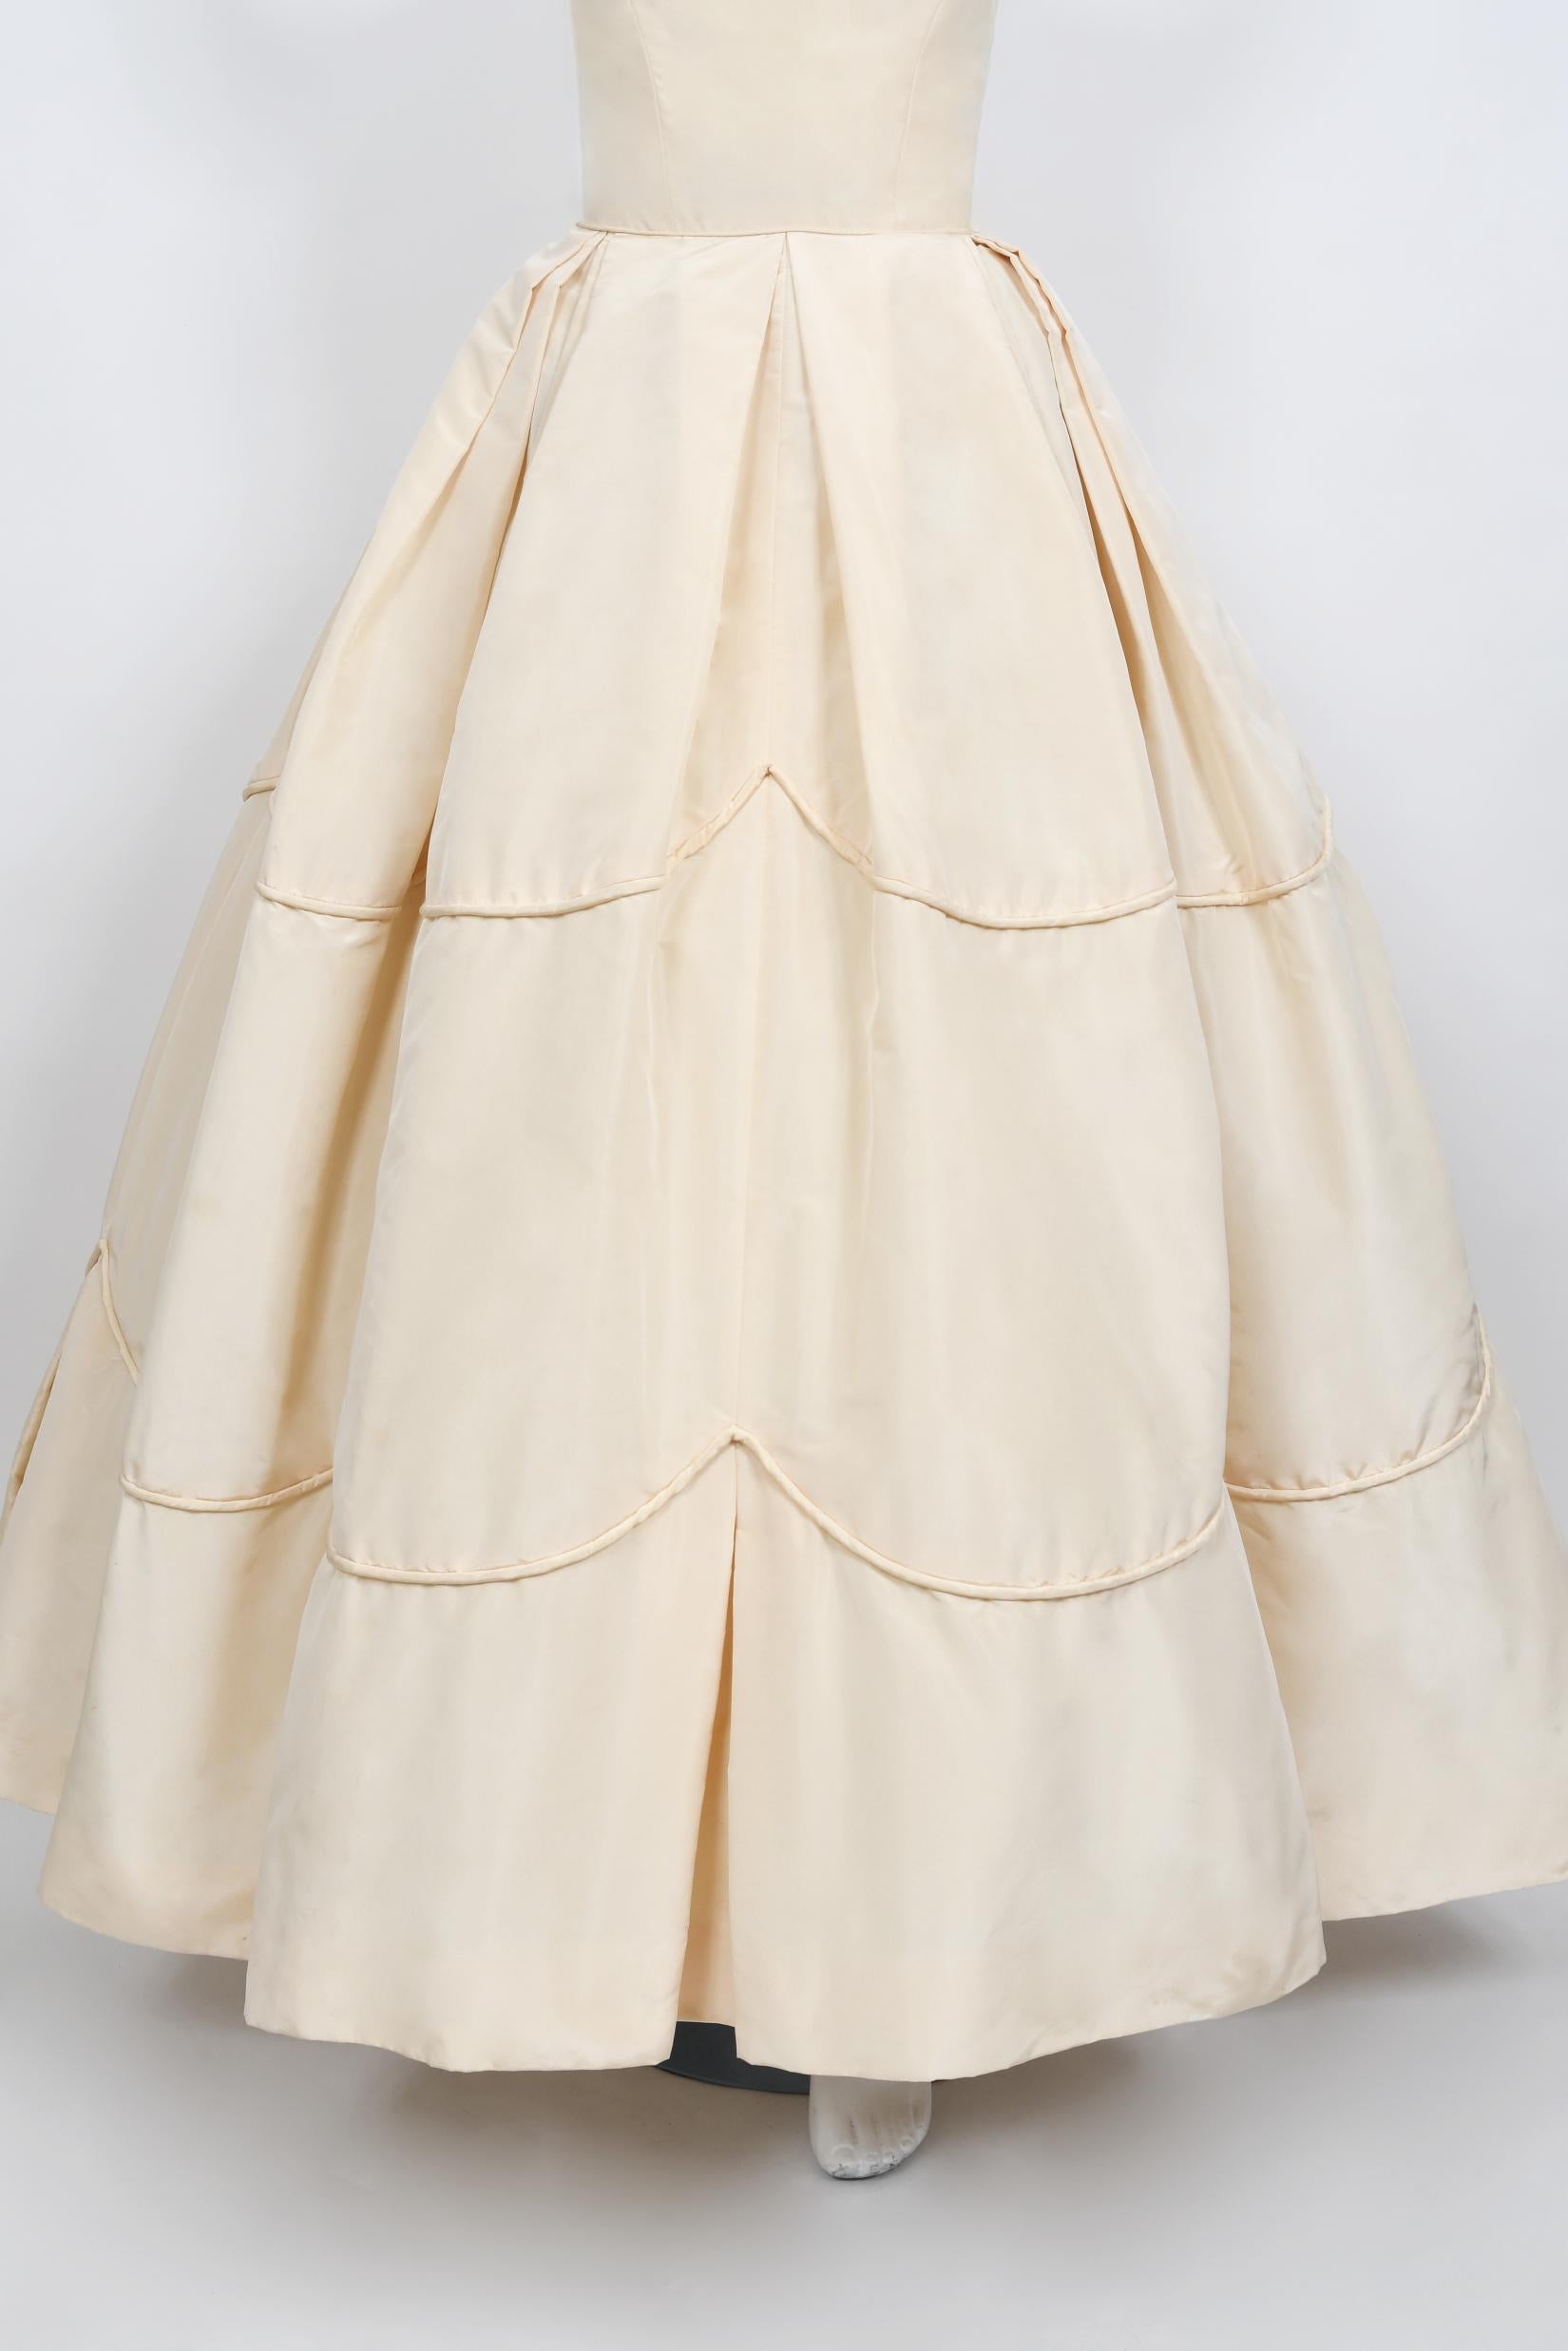 Vintage 1950s Rosalie Macrini Couture Cream Silk Strapless Bridal Wedding Gown   5